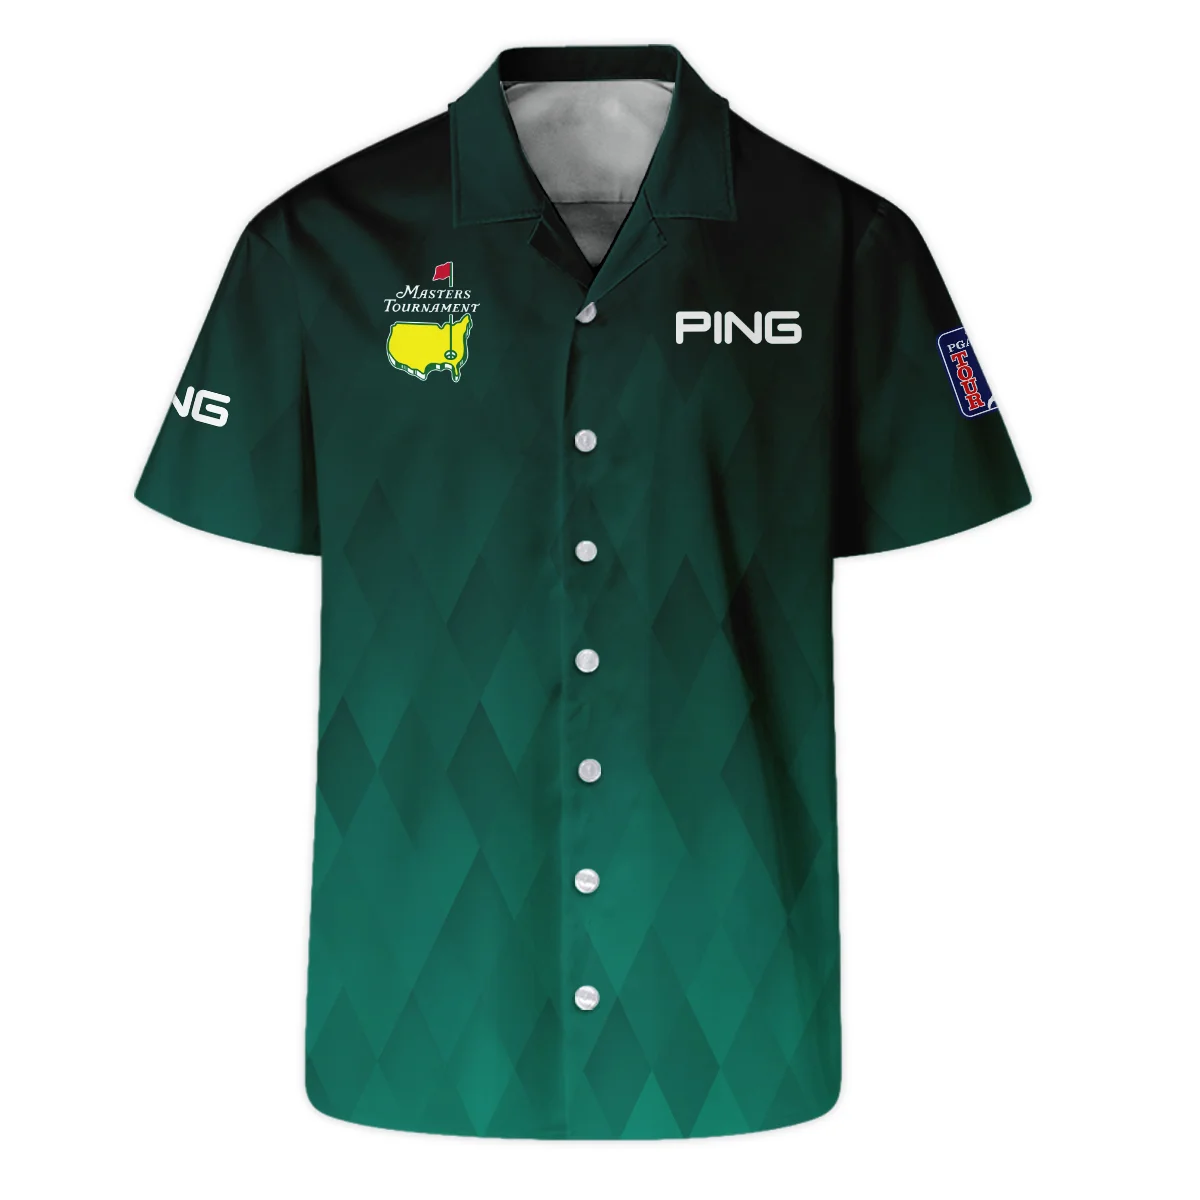 Gradient Dark Green Geometric Pattern Masters Tournament Ping Unisex T-Shirt Style Classic T-Shirt